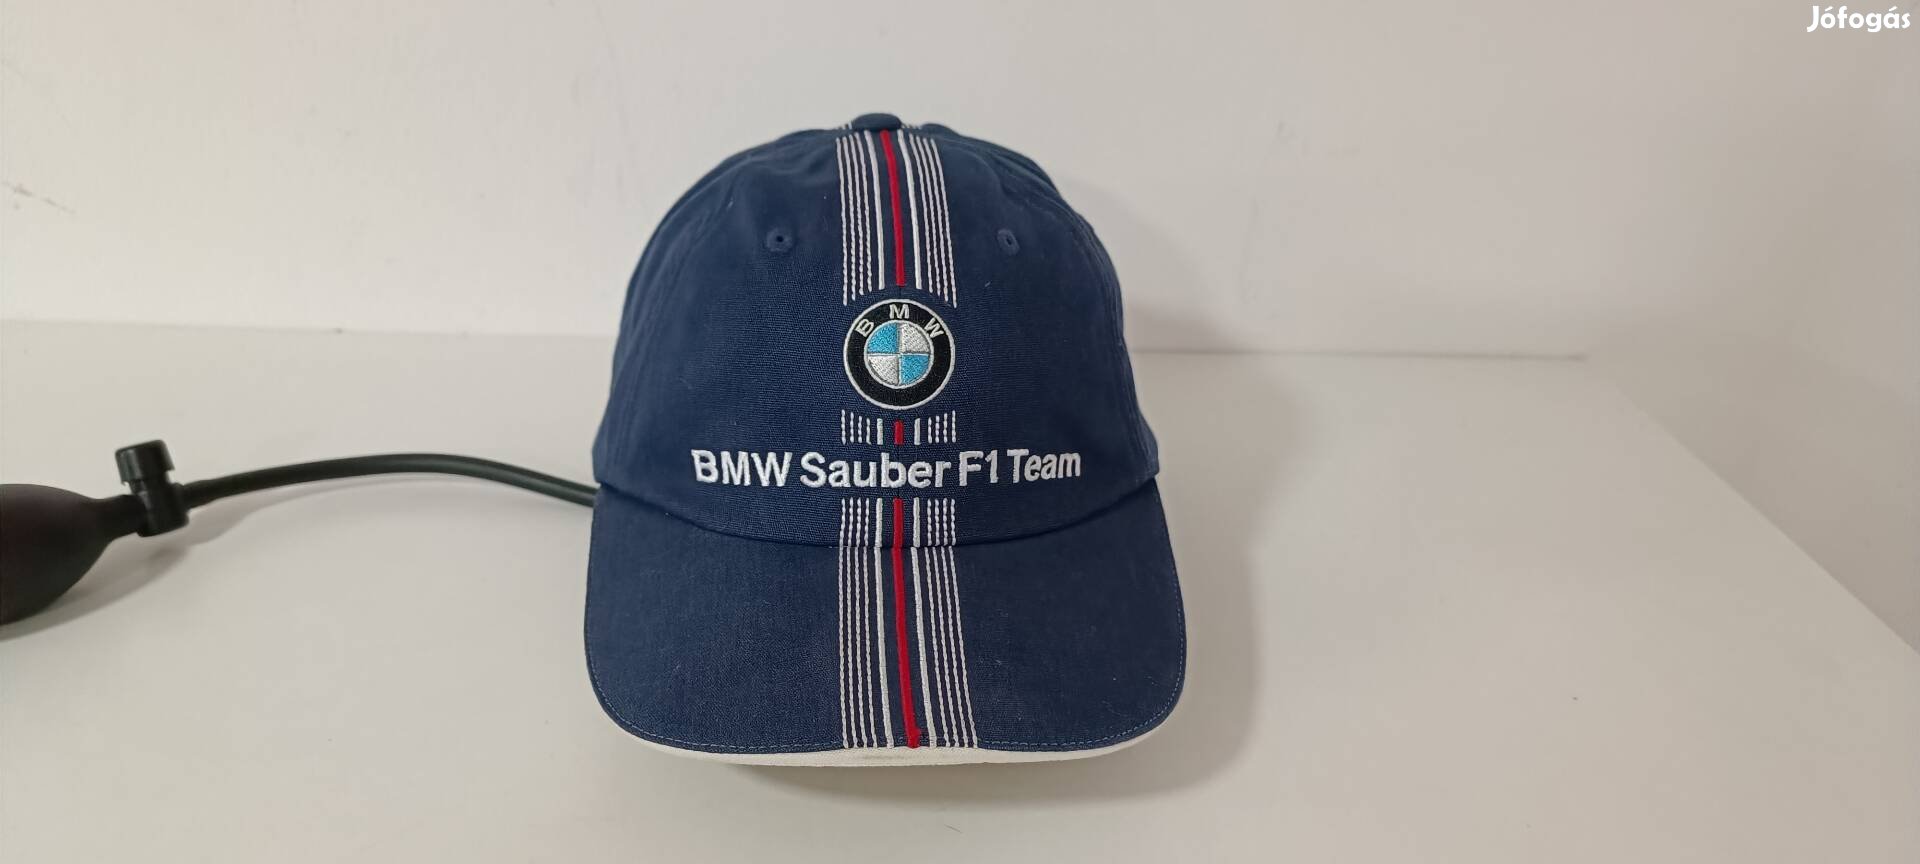 BMW Sauber F1 team baseball sapka 2008